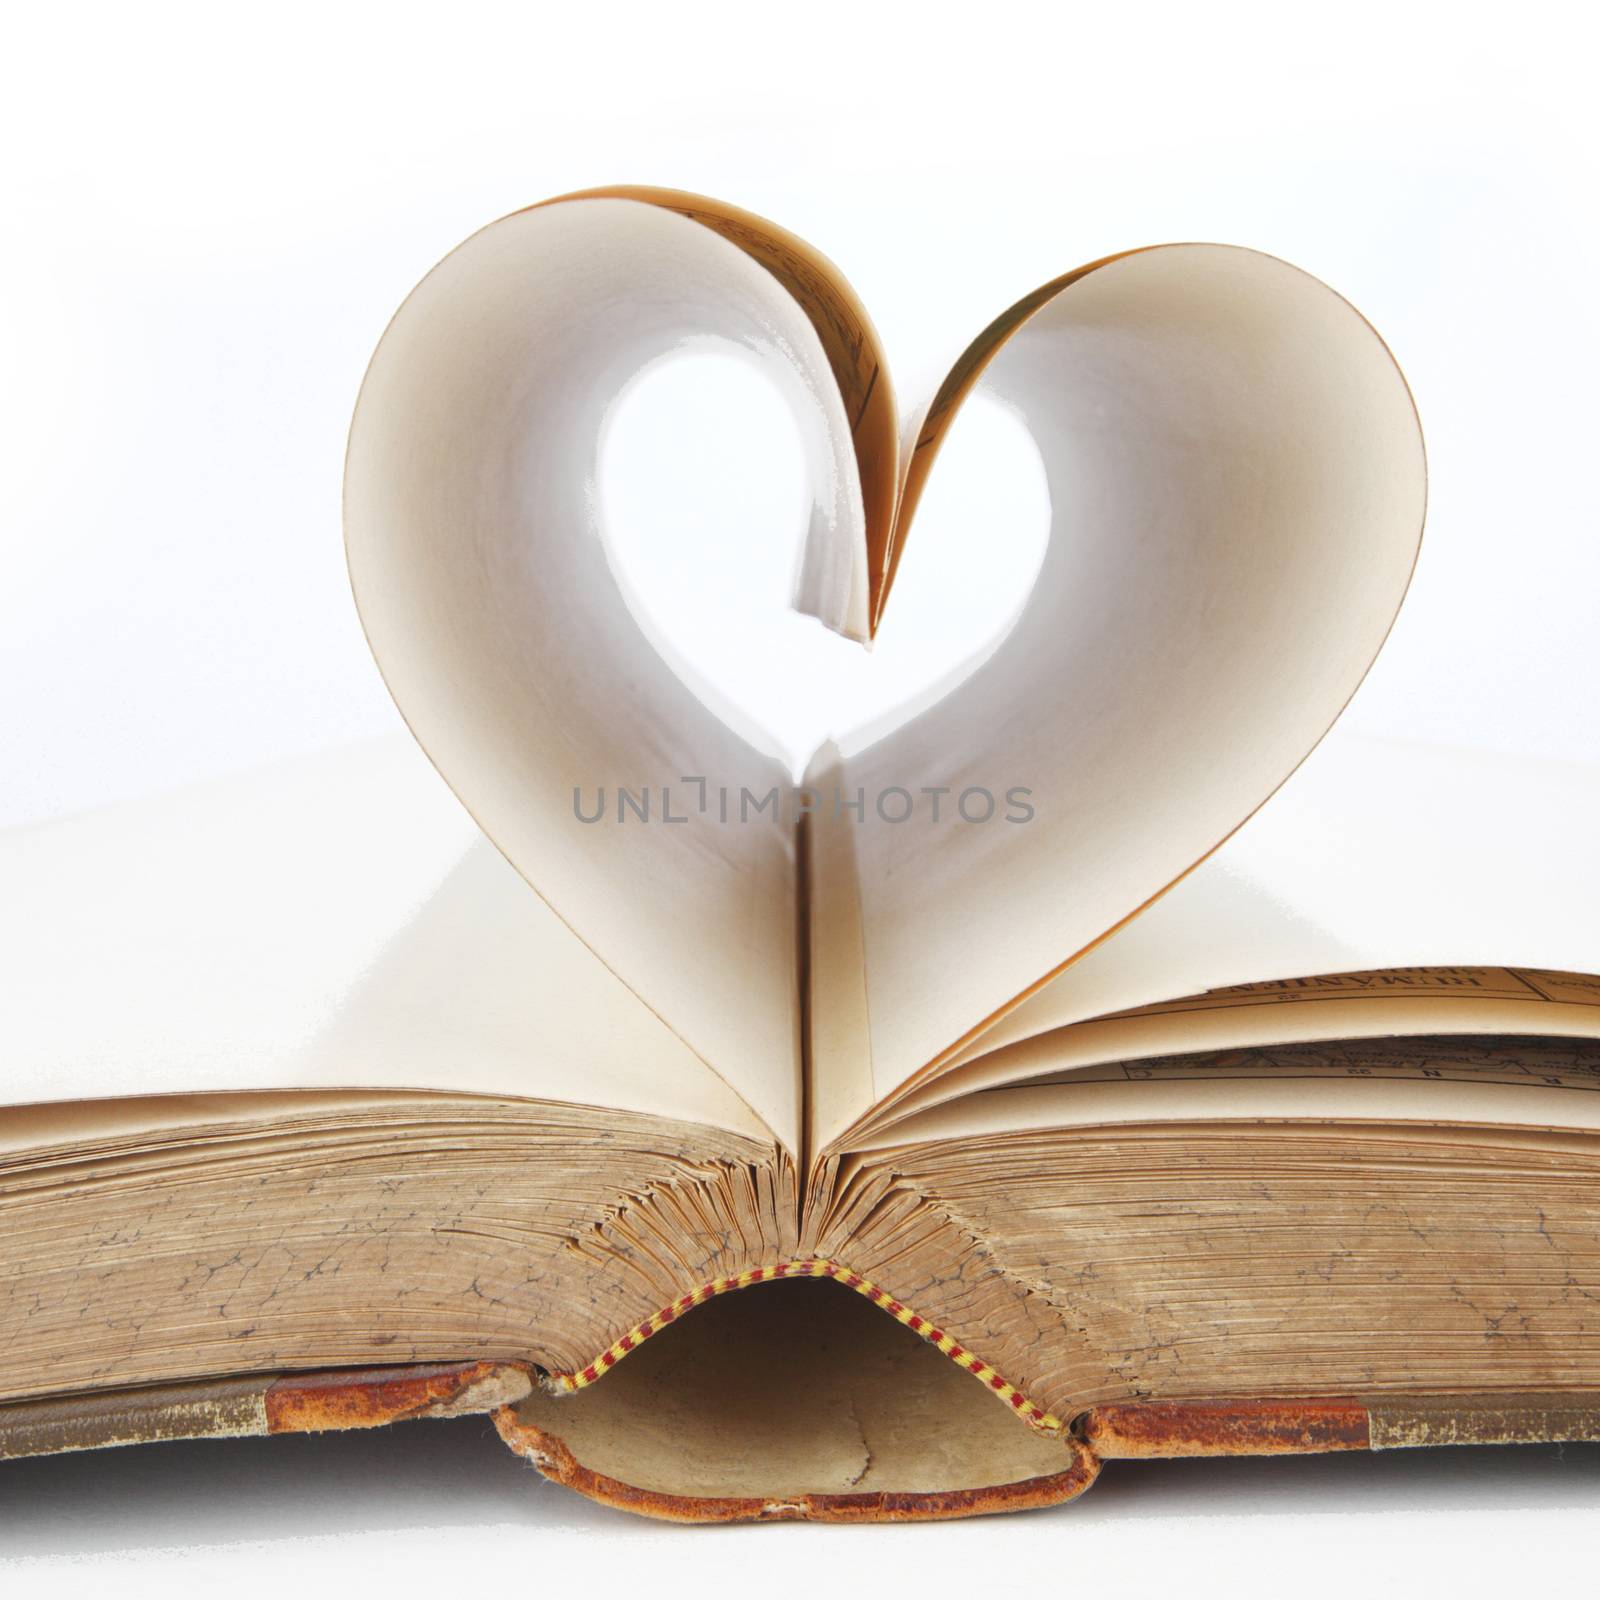 Heart inside a book by Yellowj